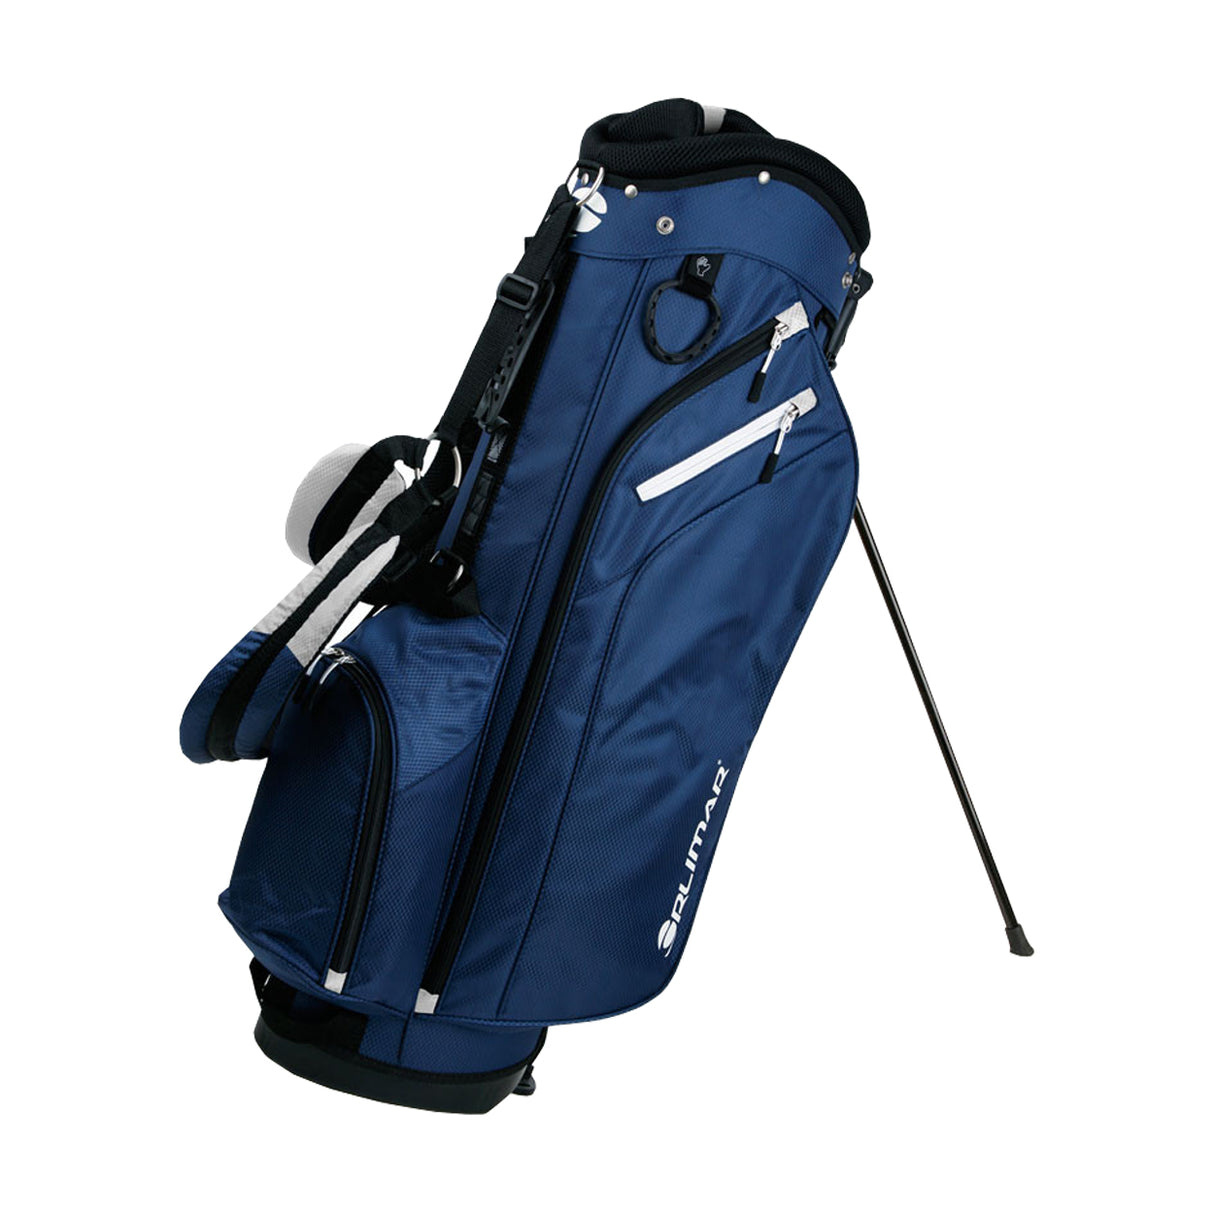 Orlimar Golf SRX 7.4 Deluxe Stand Bag